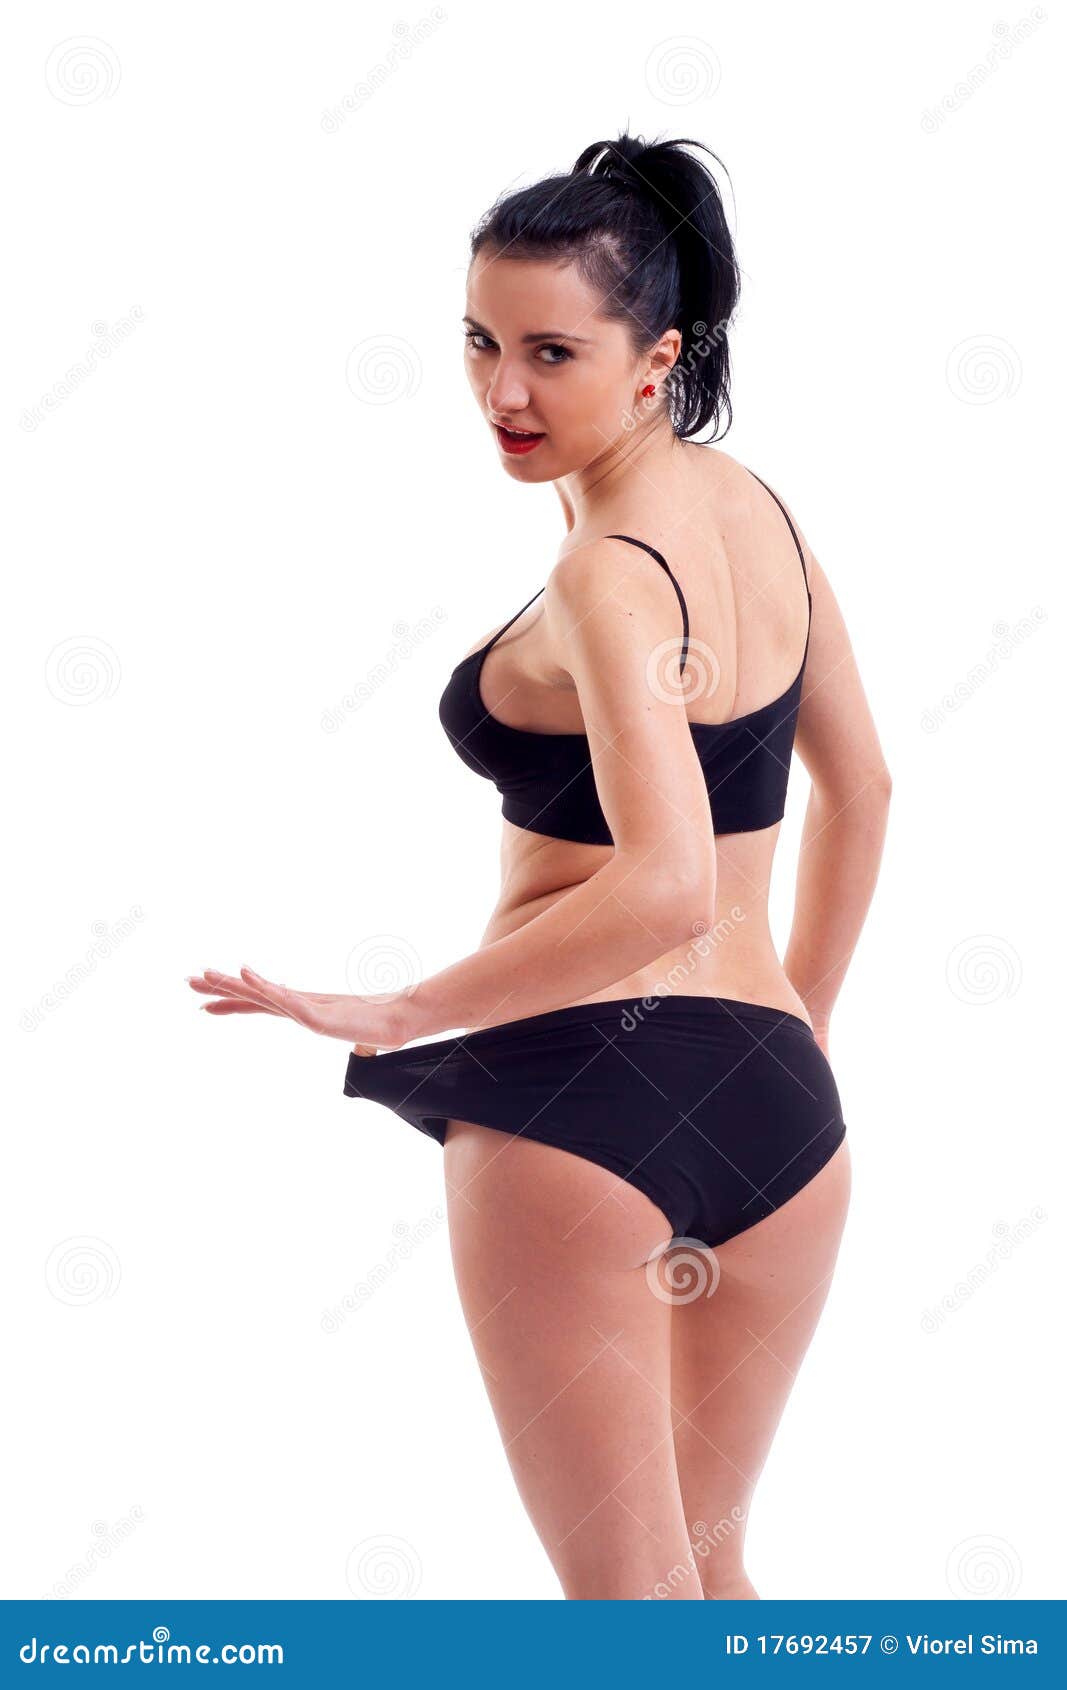 https://thumbs.dreamstime.com/z/sexy-woman-pulling-her-underwear-17692457.jpg